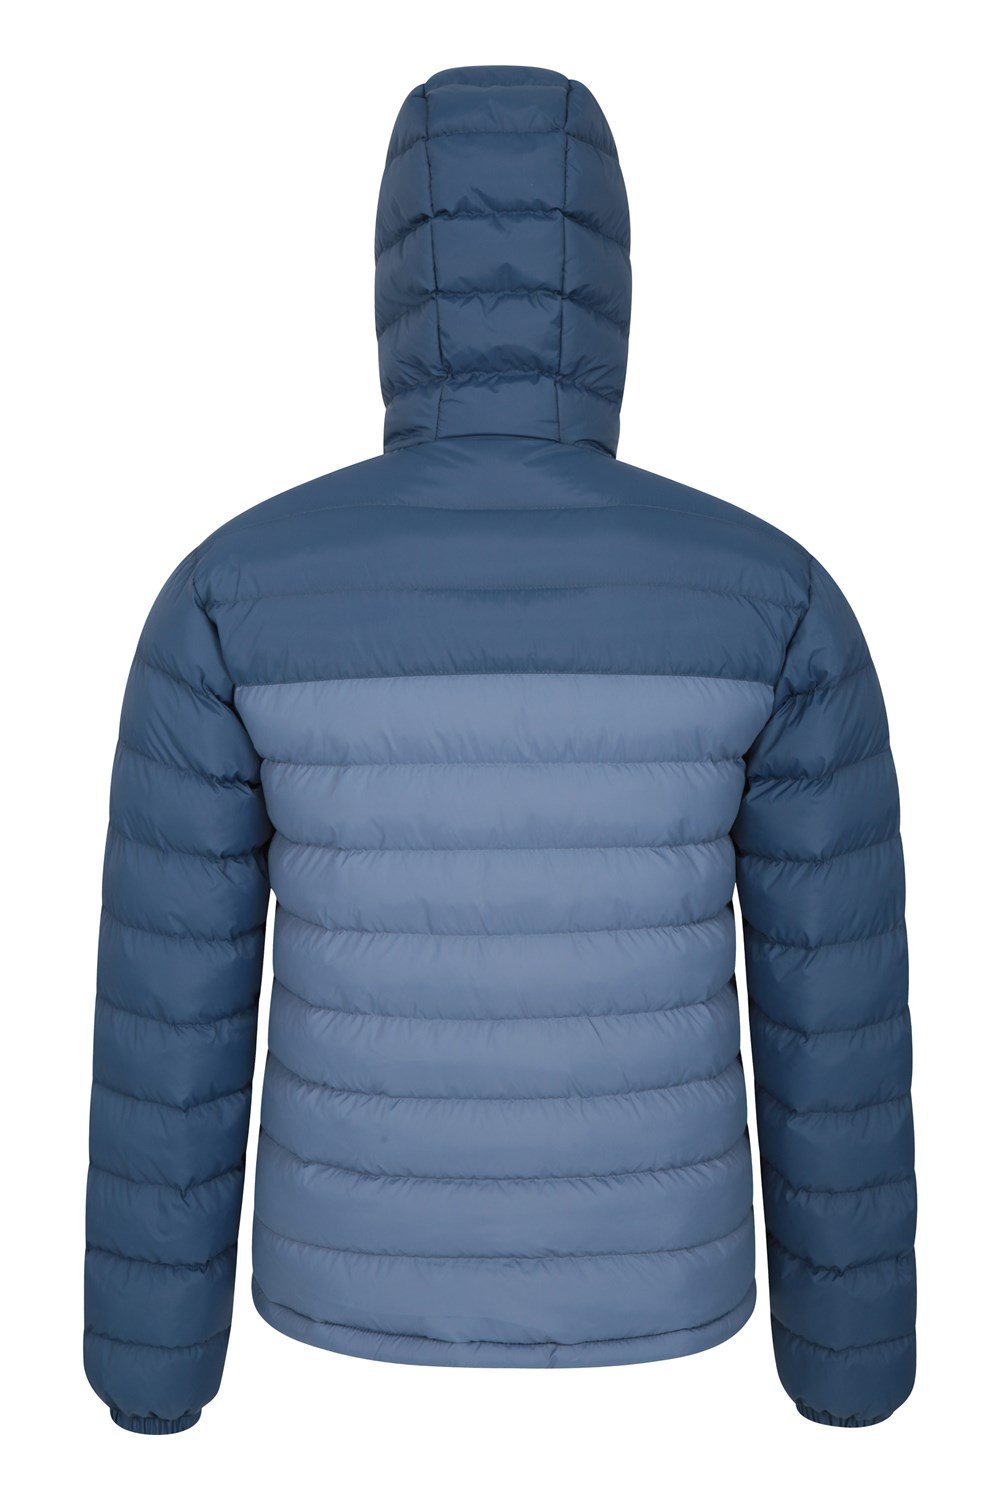 Mountain Warehouse Mens Seasons Padded Jacket Puffer Water Resistant ...